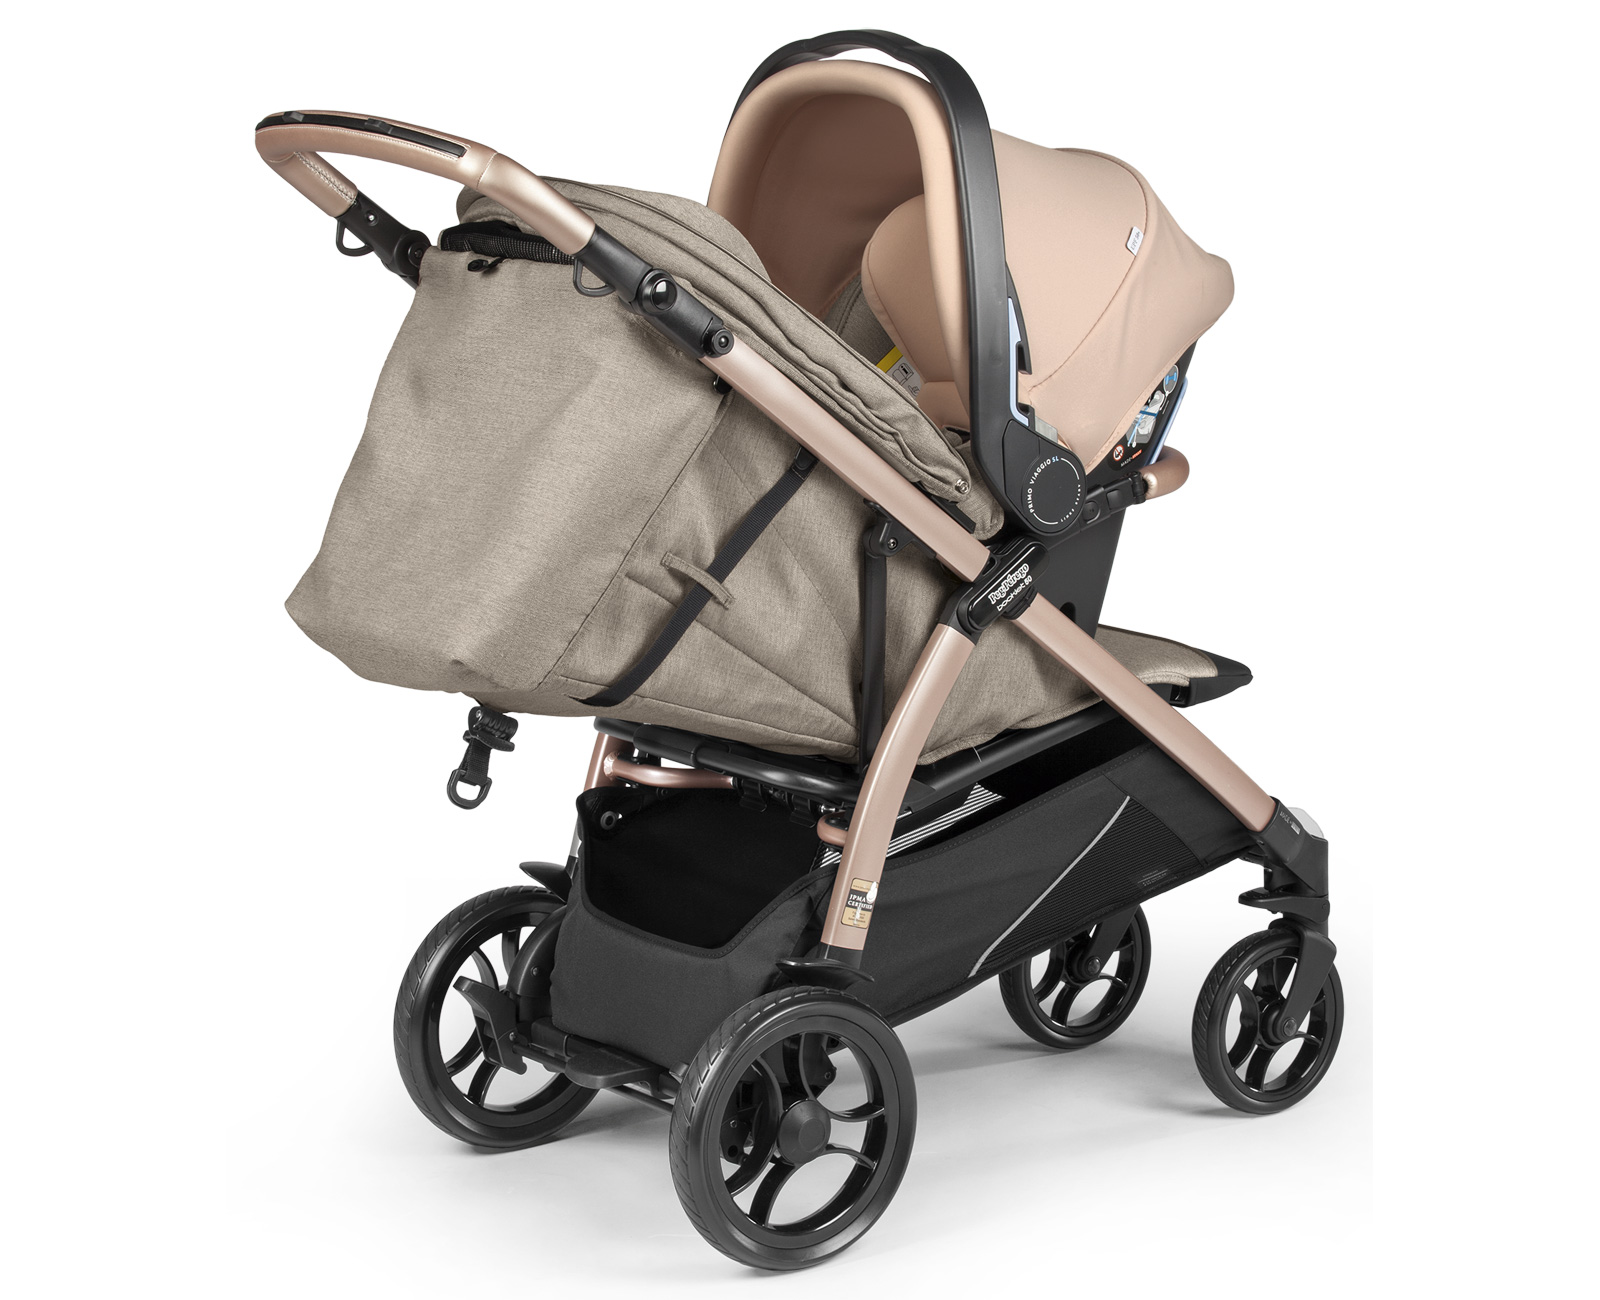 Carrycot Poussette Passeggino Dynamic Baby Pram Buggy Pushchair Stroller 